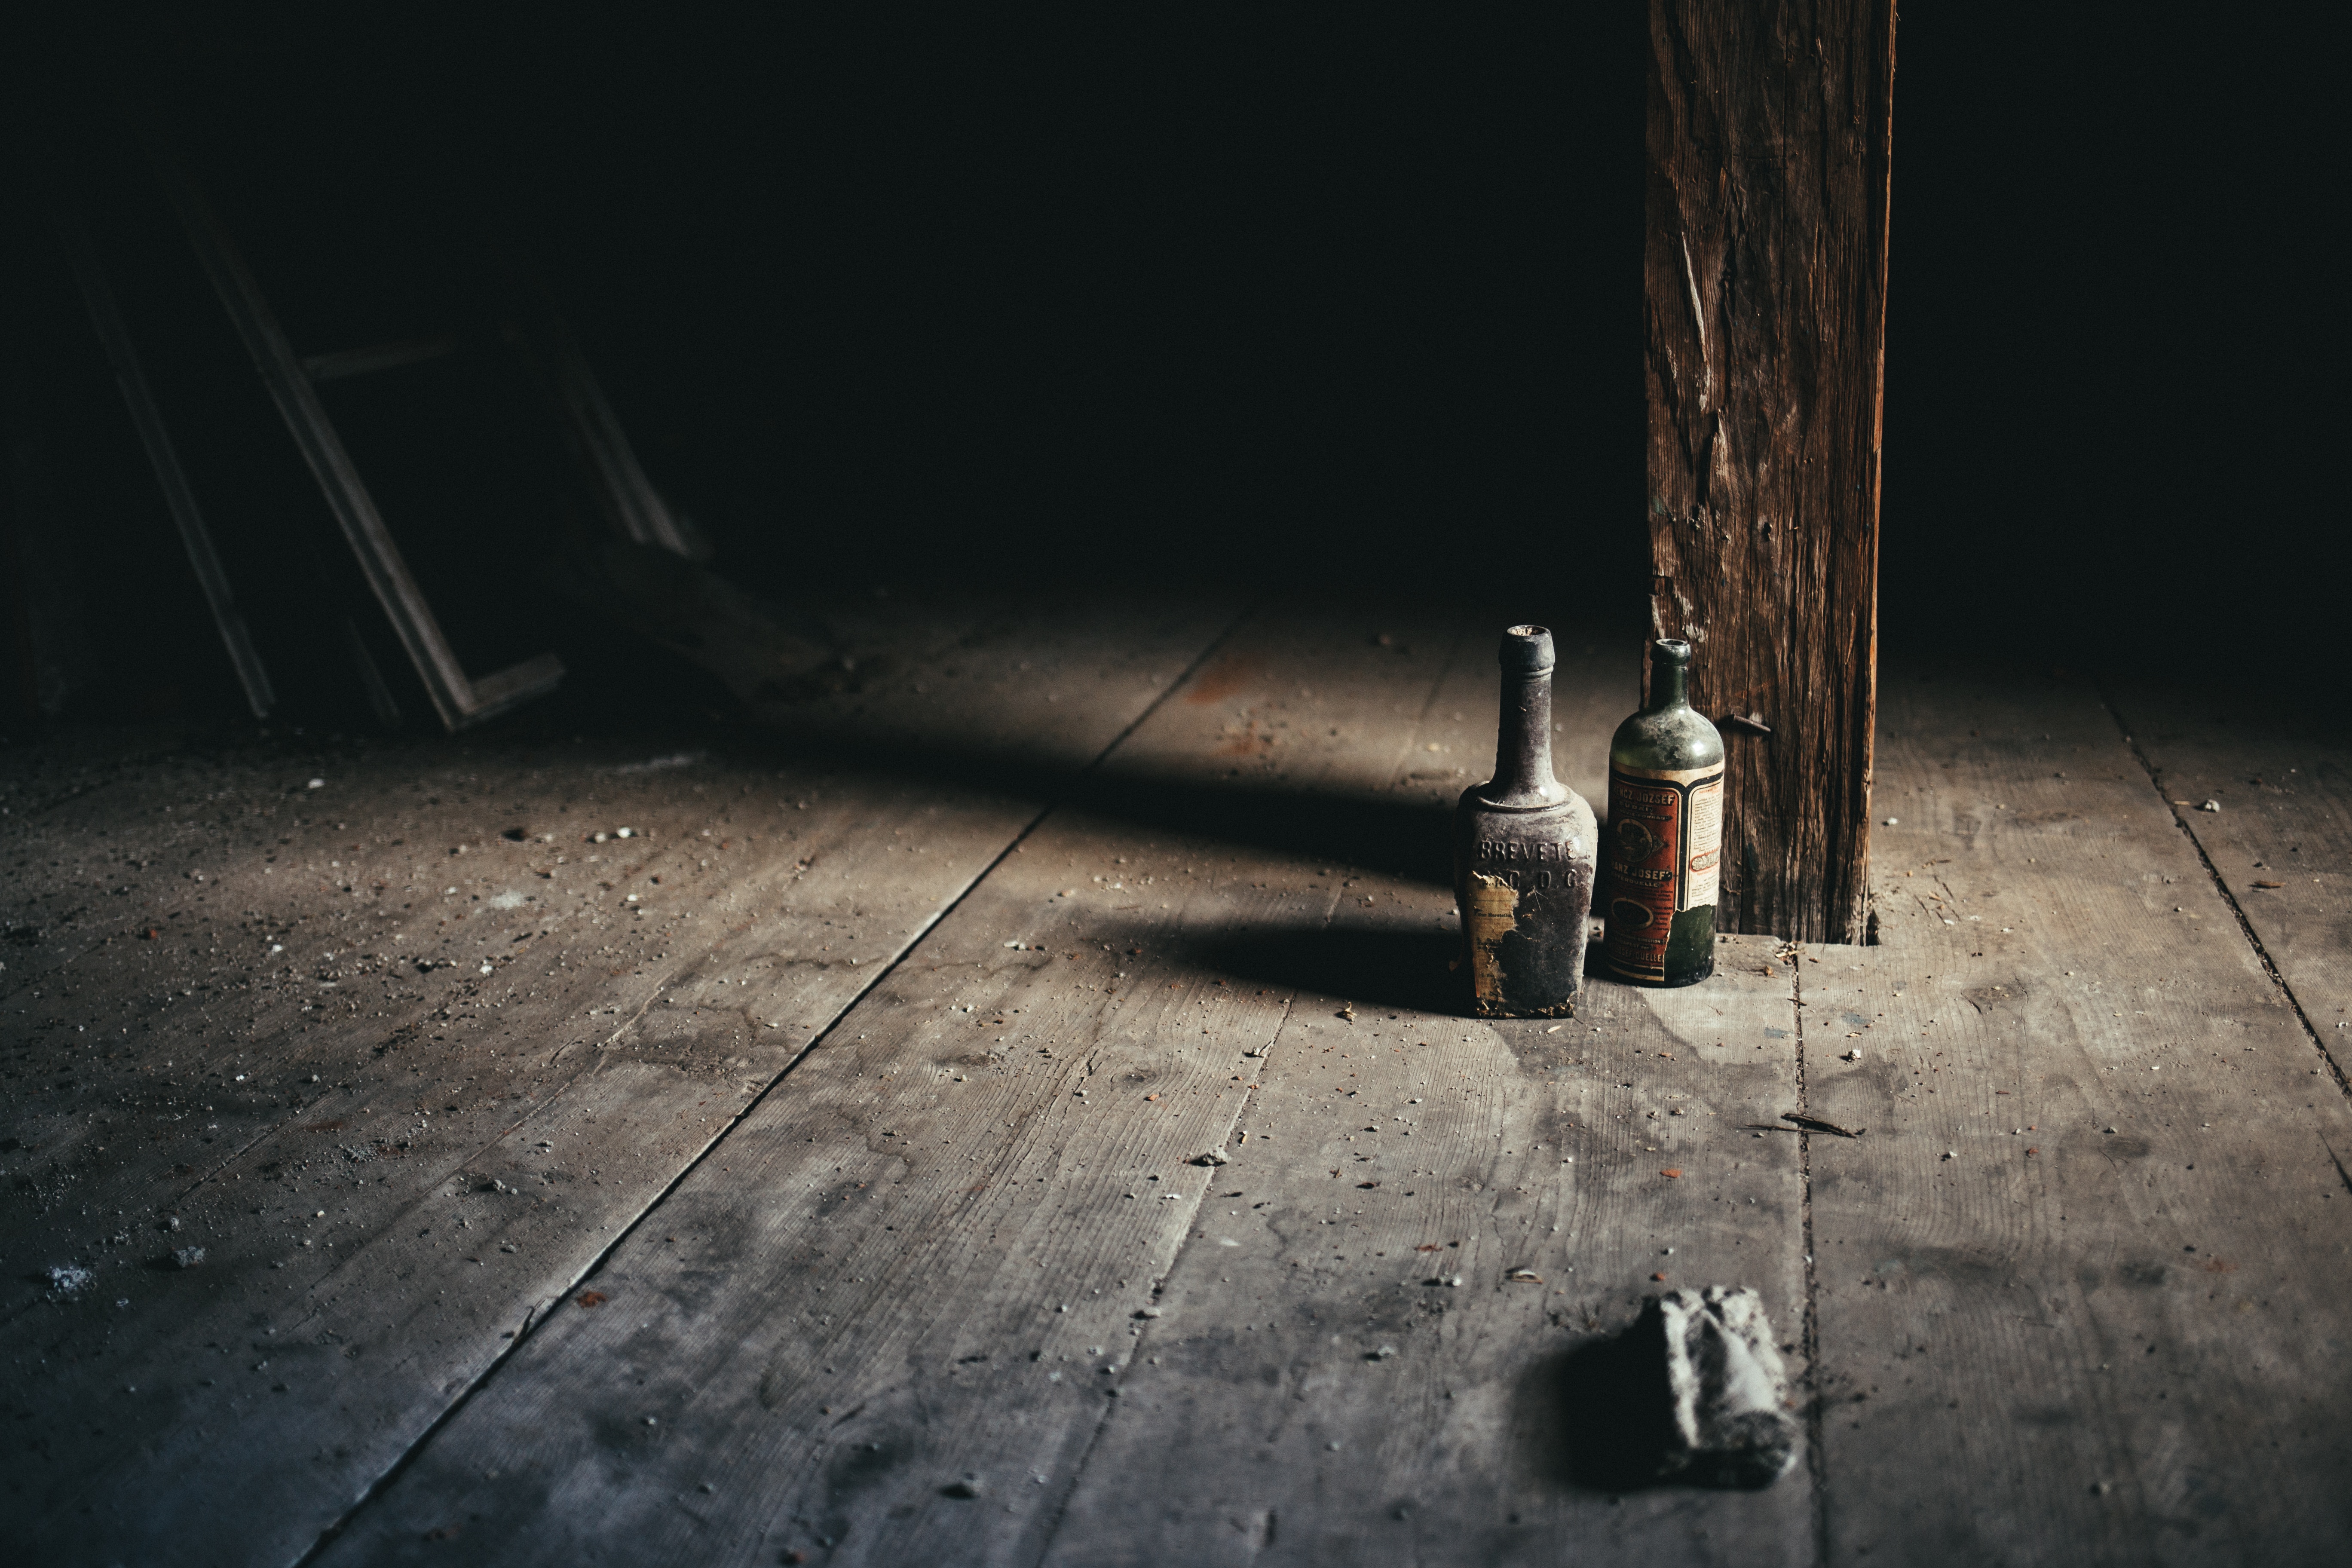 two bottles on floor near wooden post